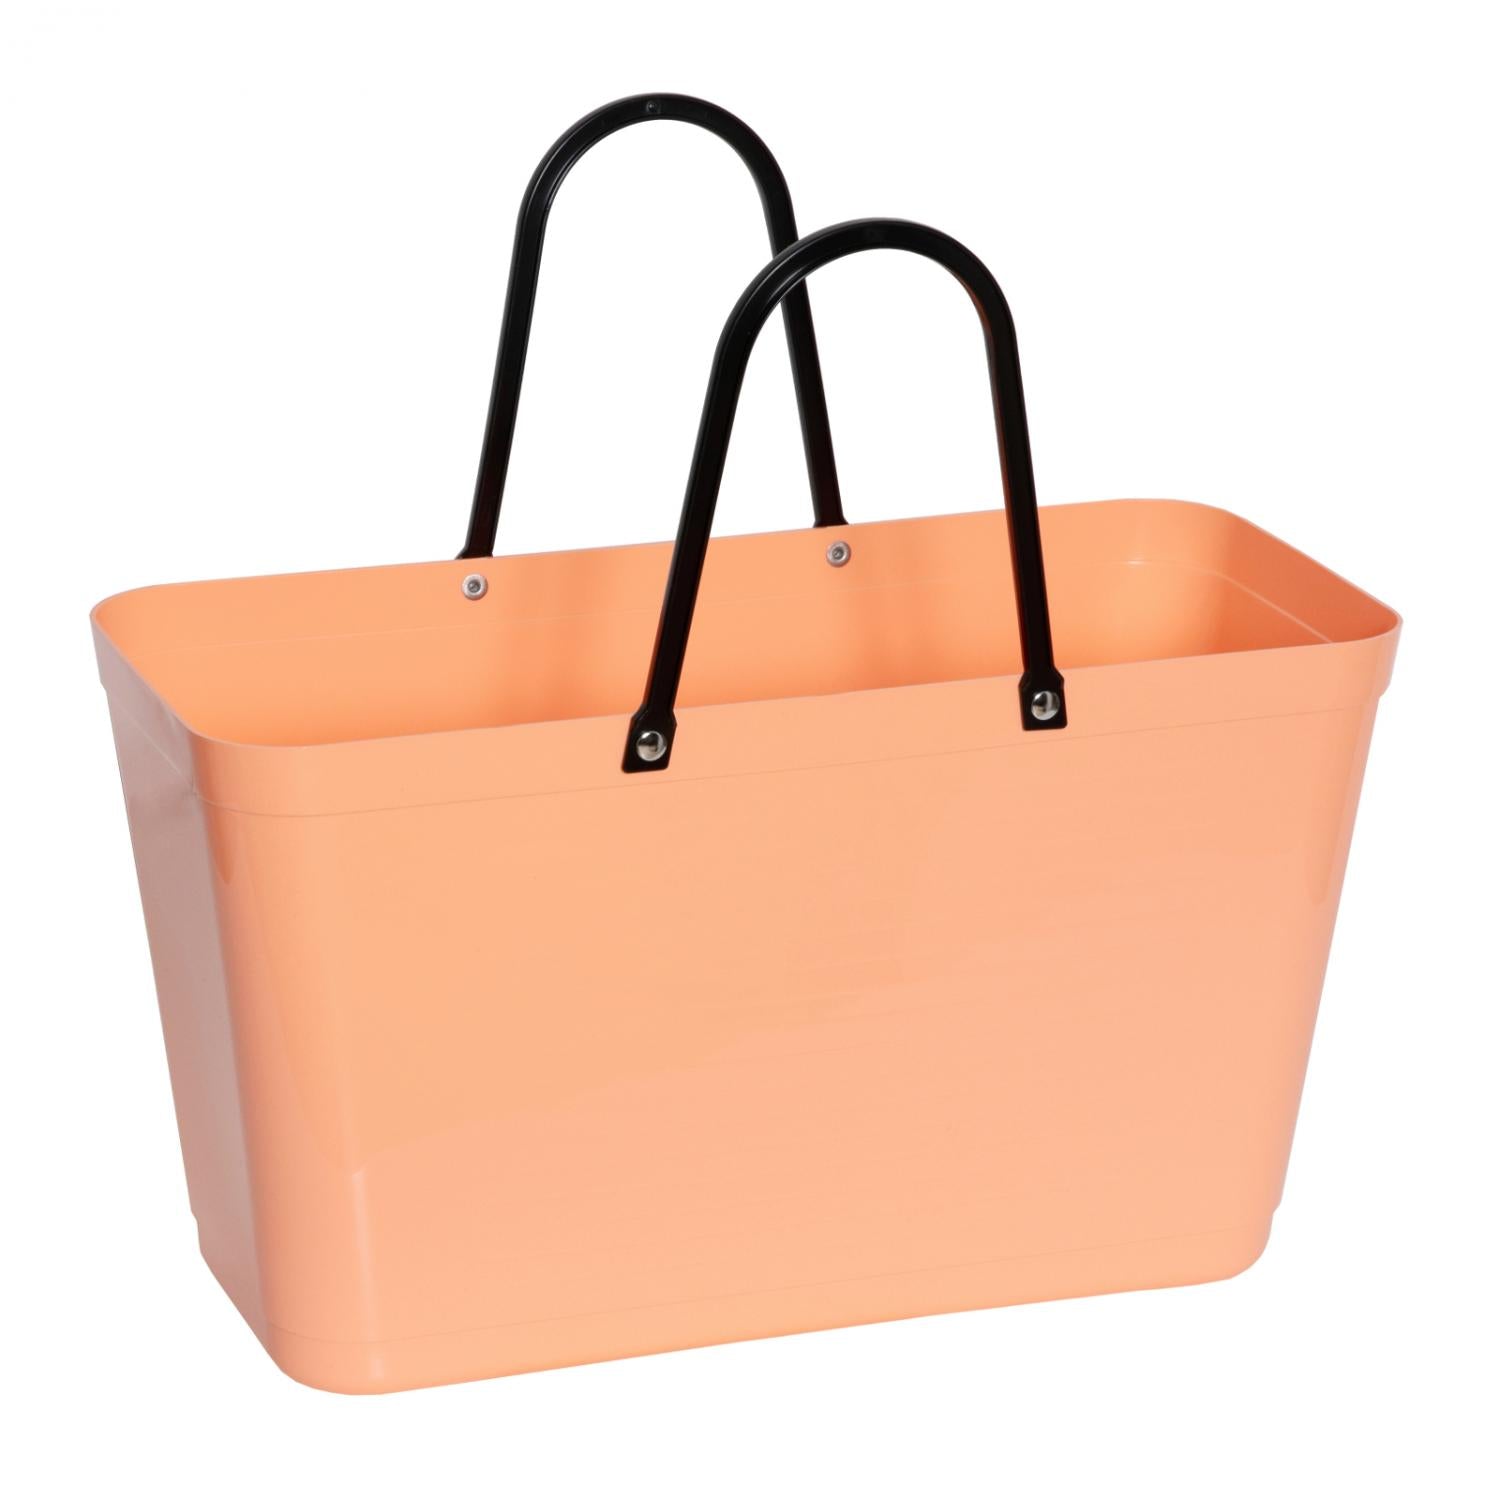 Apricot shopping bag